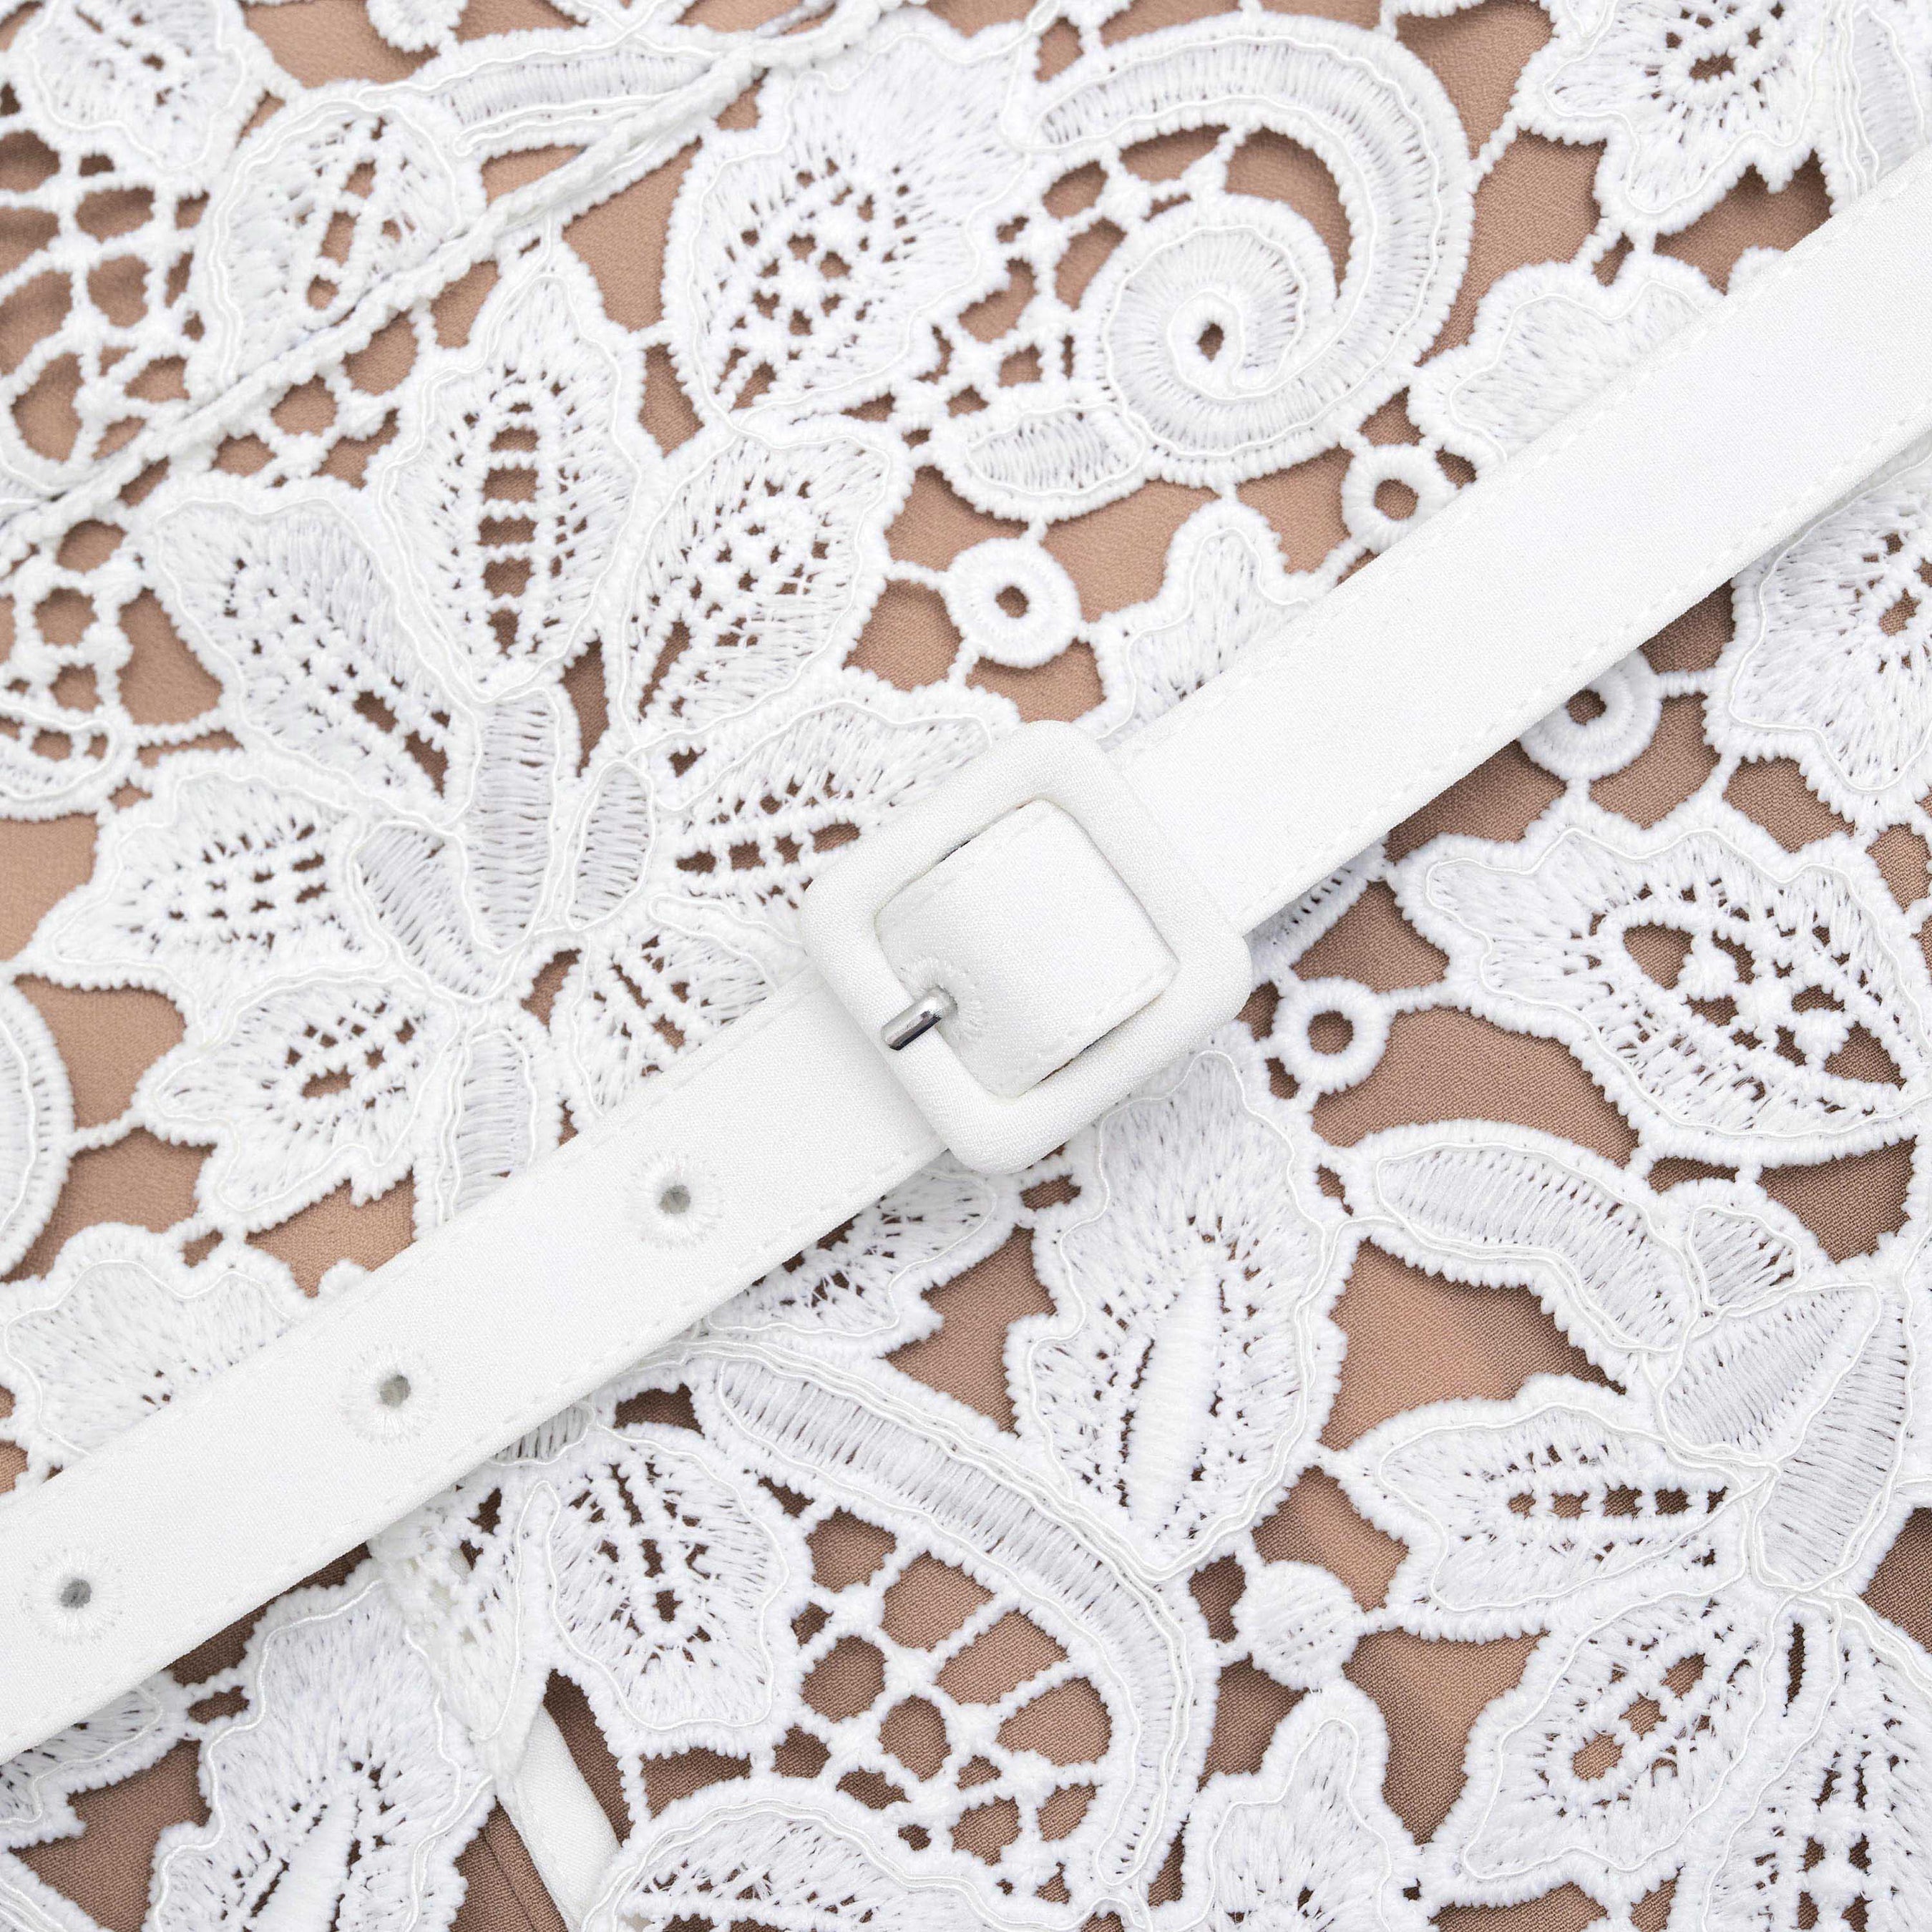 White Floral Lace Mini Dress